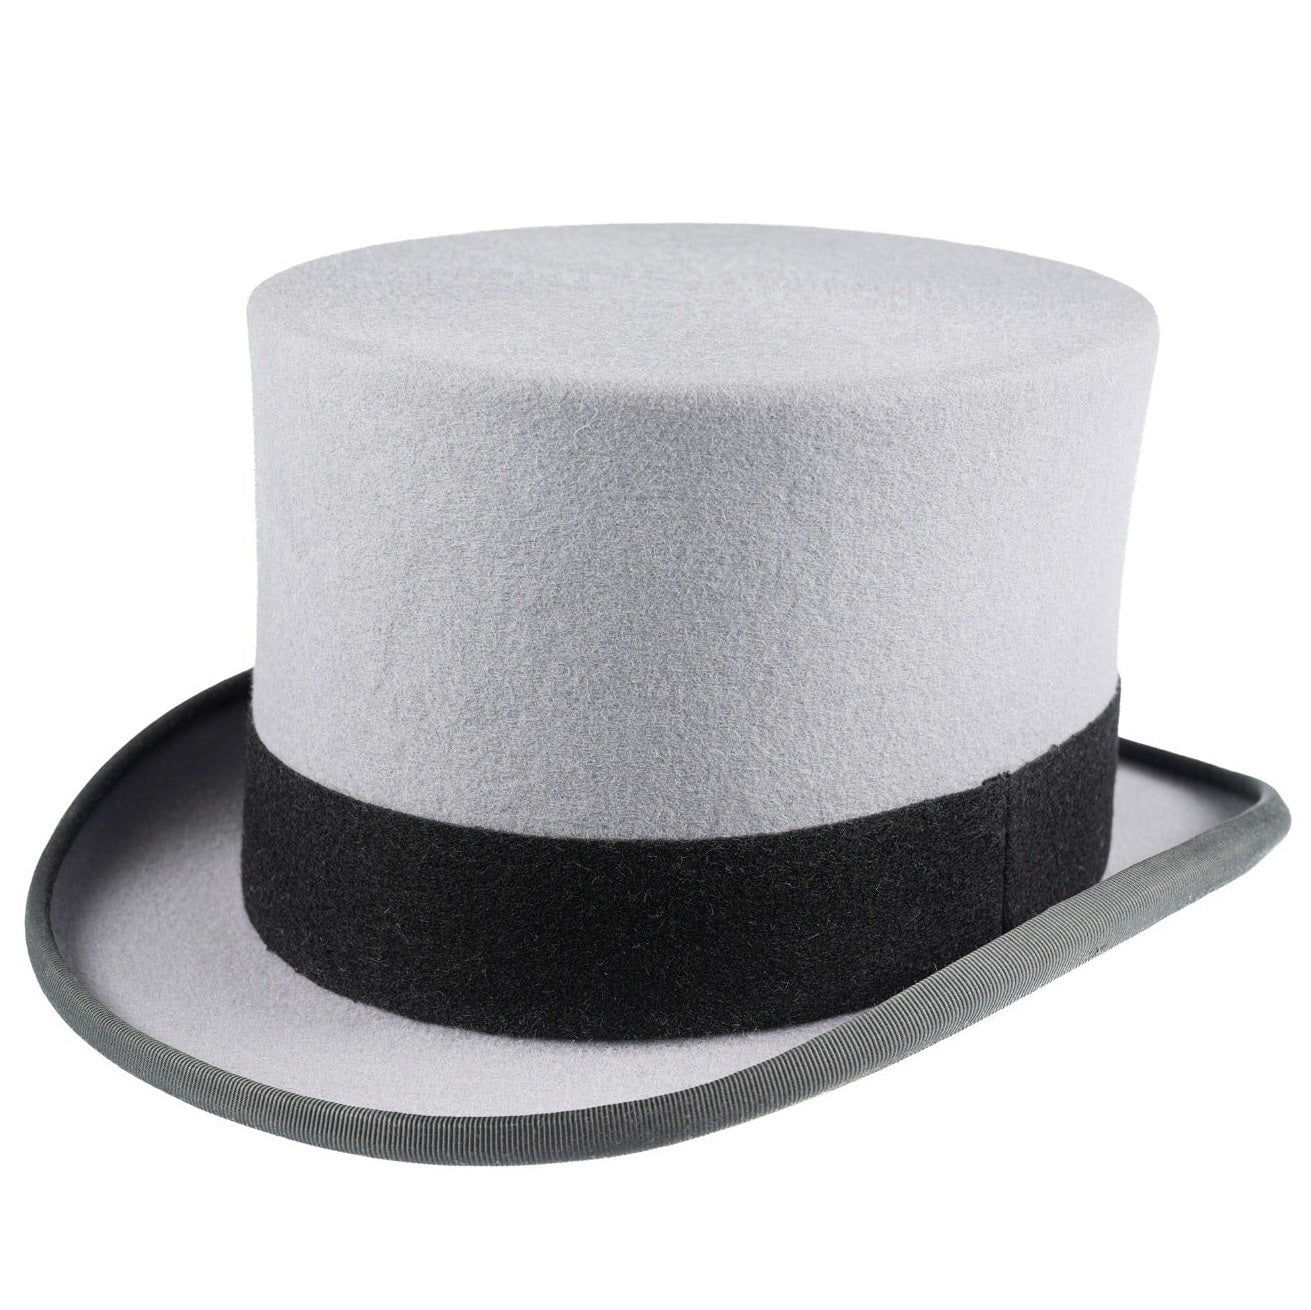 CHRISTYS' Ascot Fur Felt Top Hat - Grey